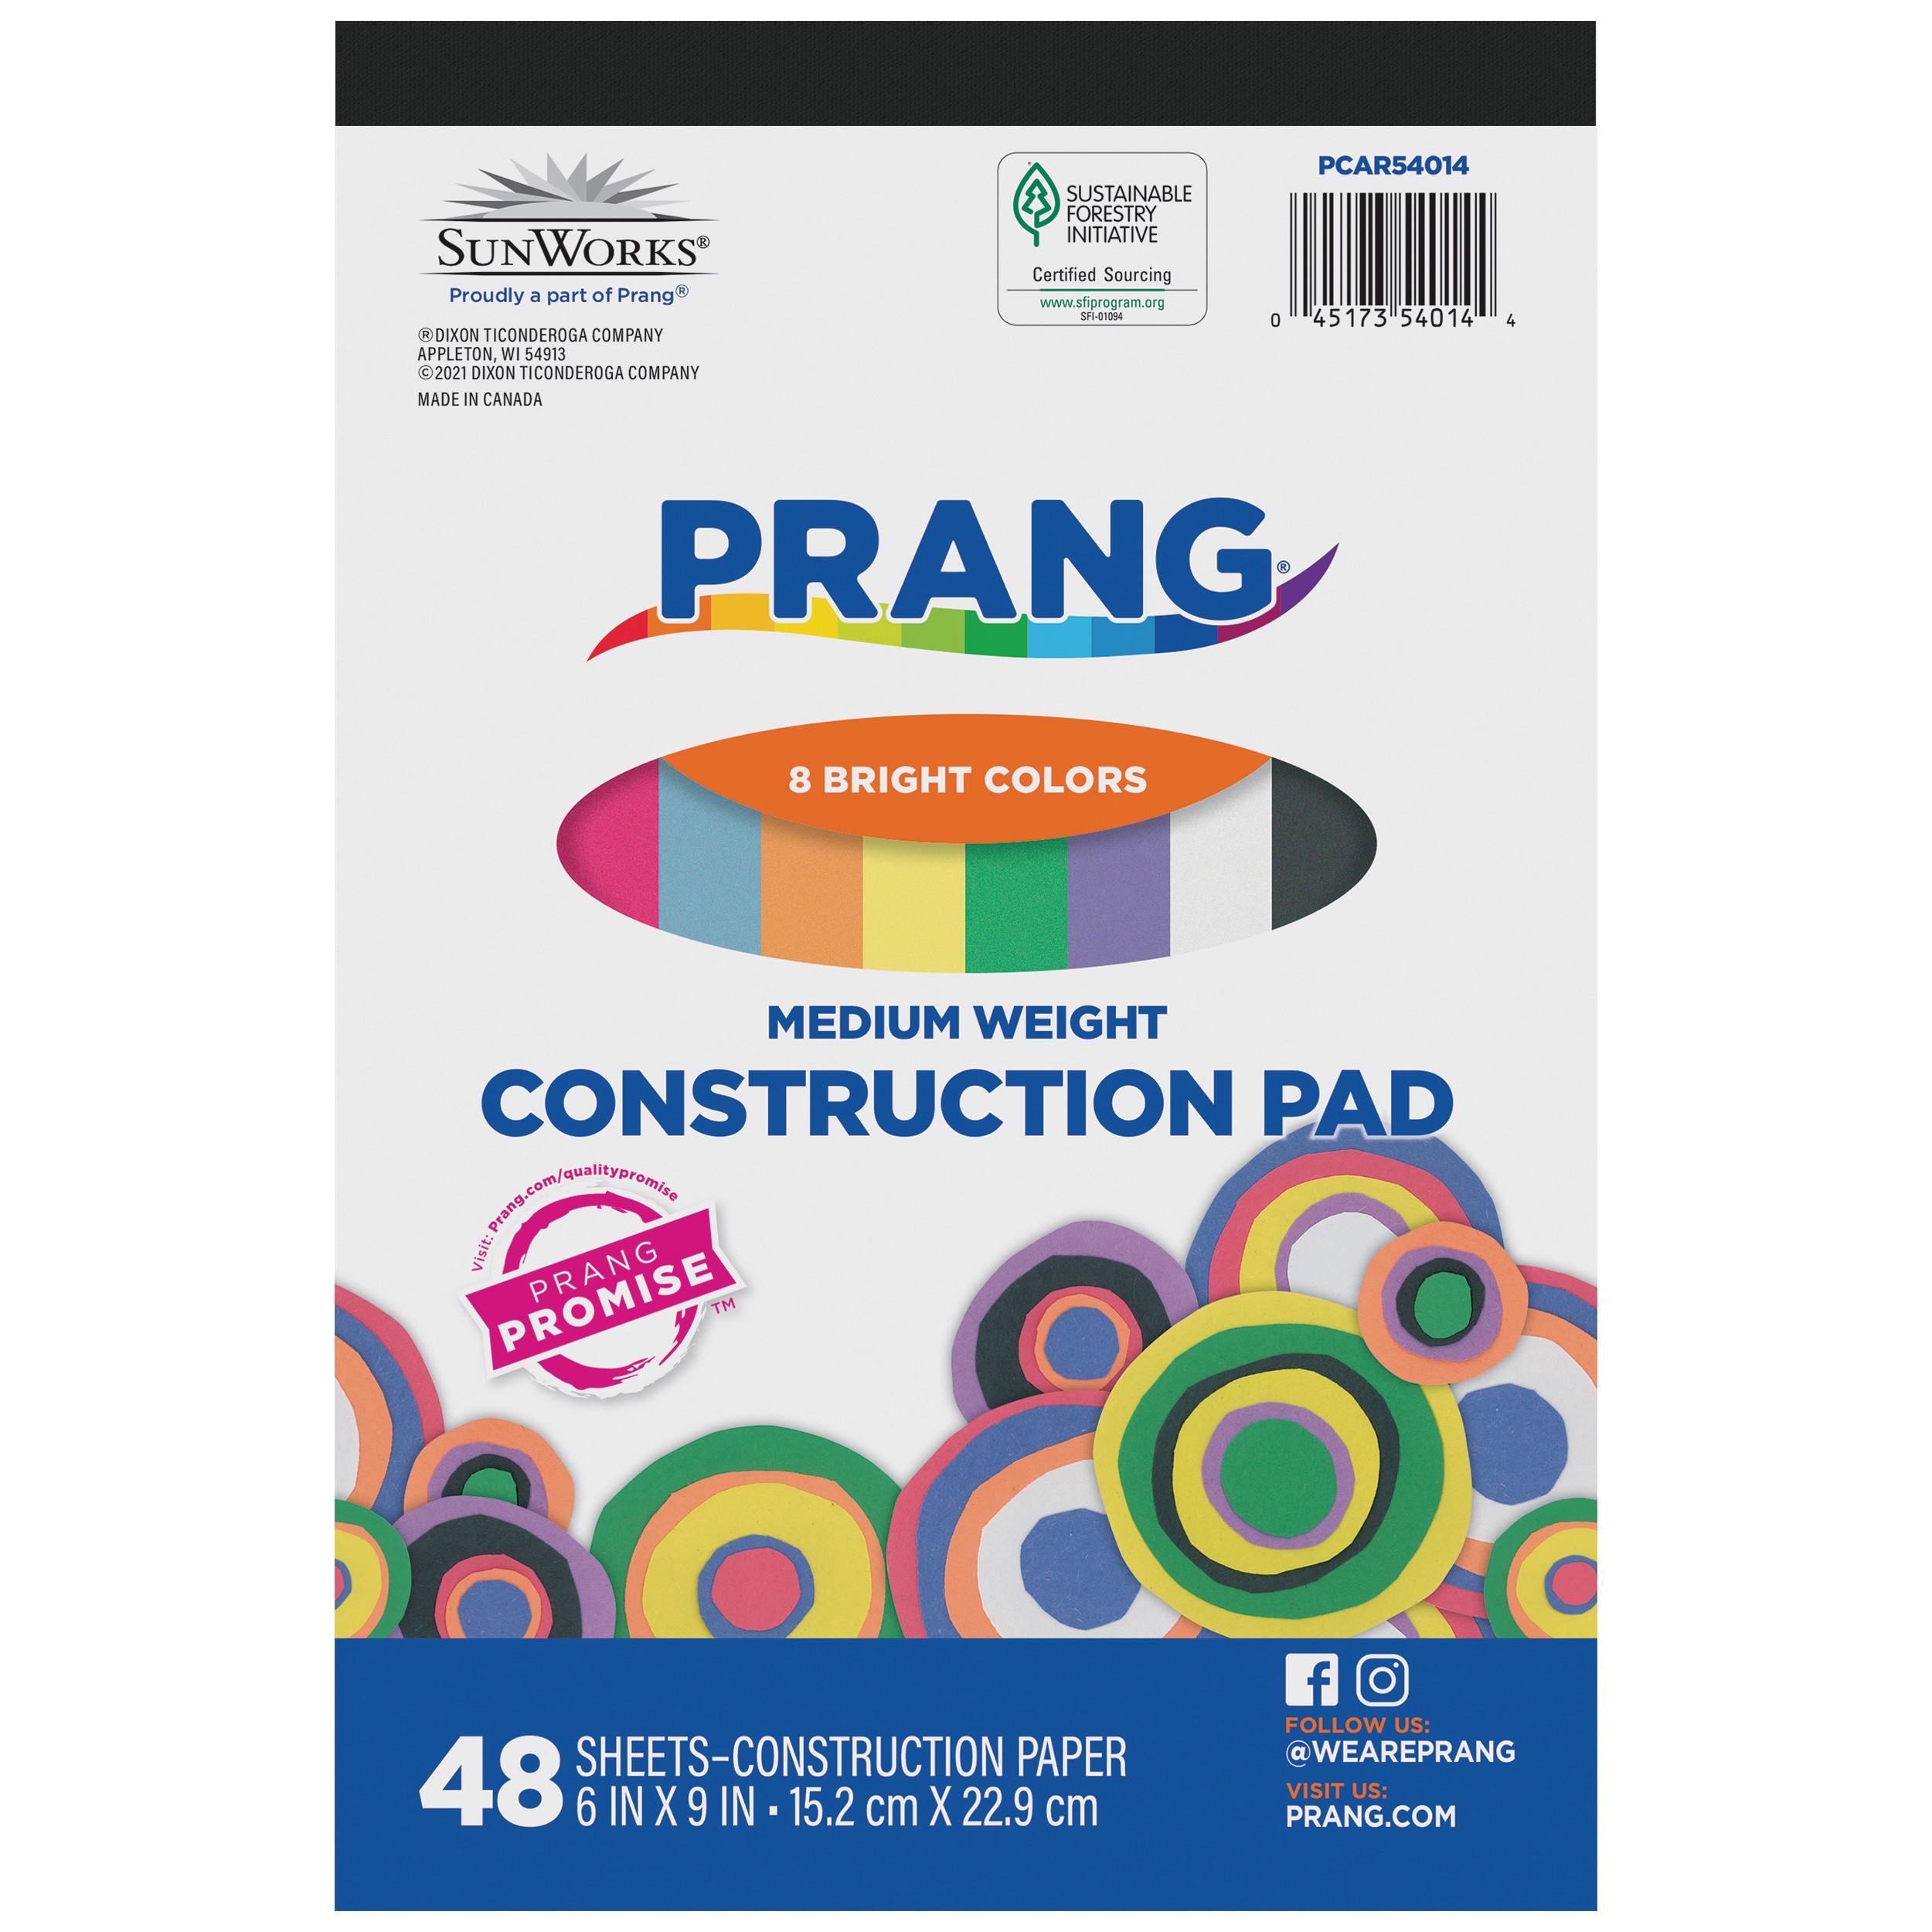 Prang Construction Paper 6907, 1 - Harris Teeter